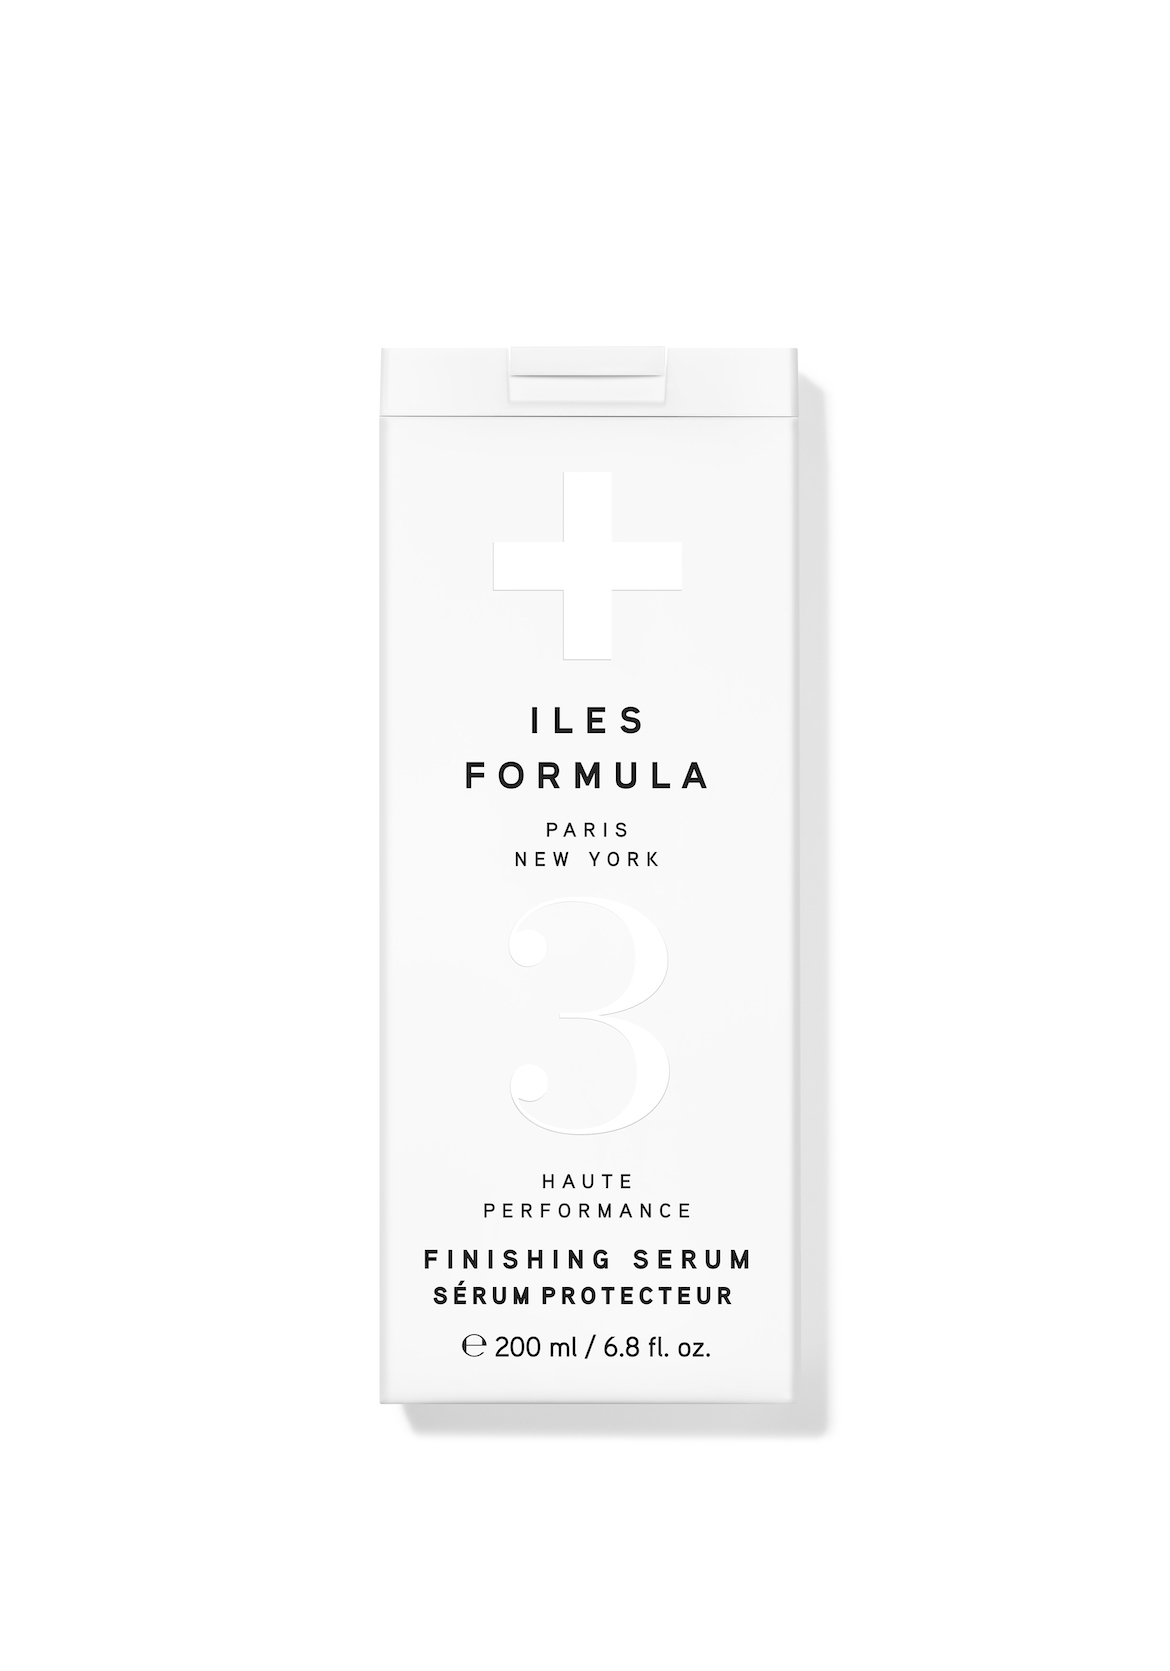 A white bottle of Iles Formula hair serum.